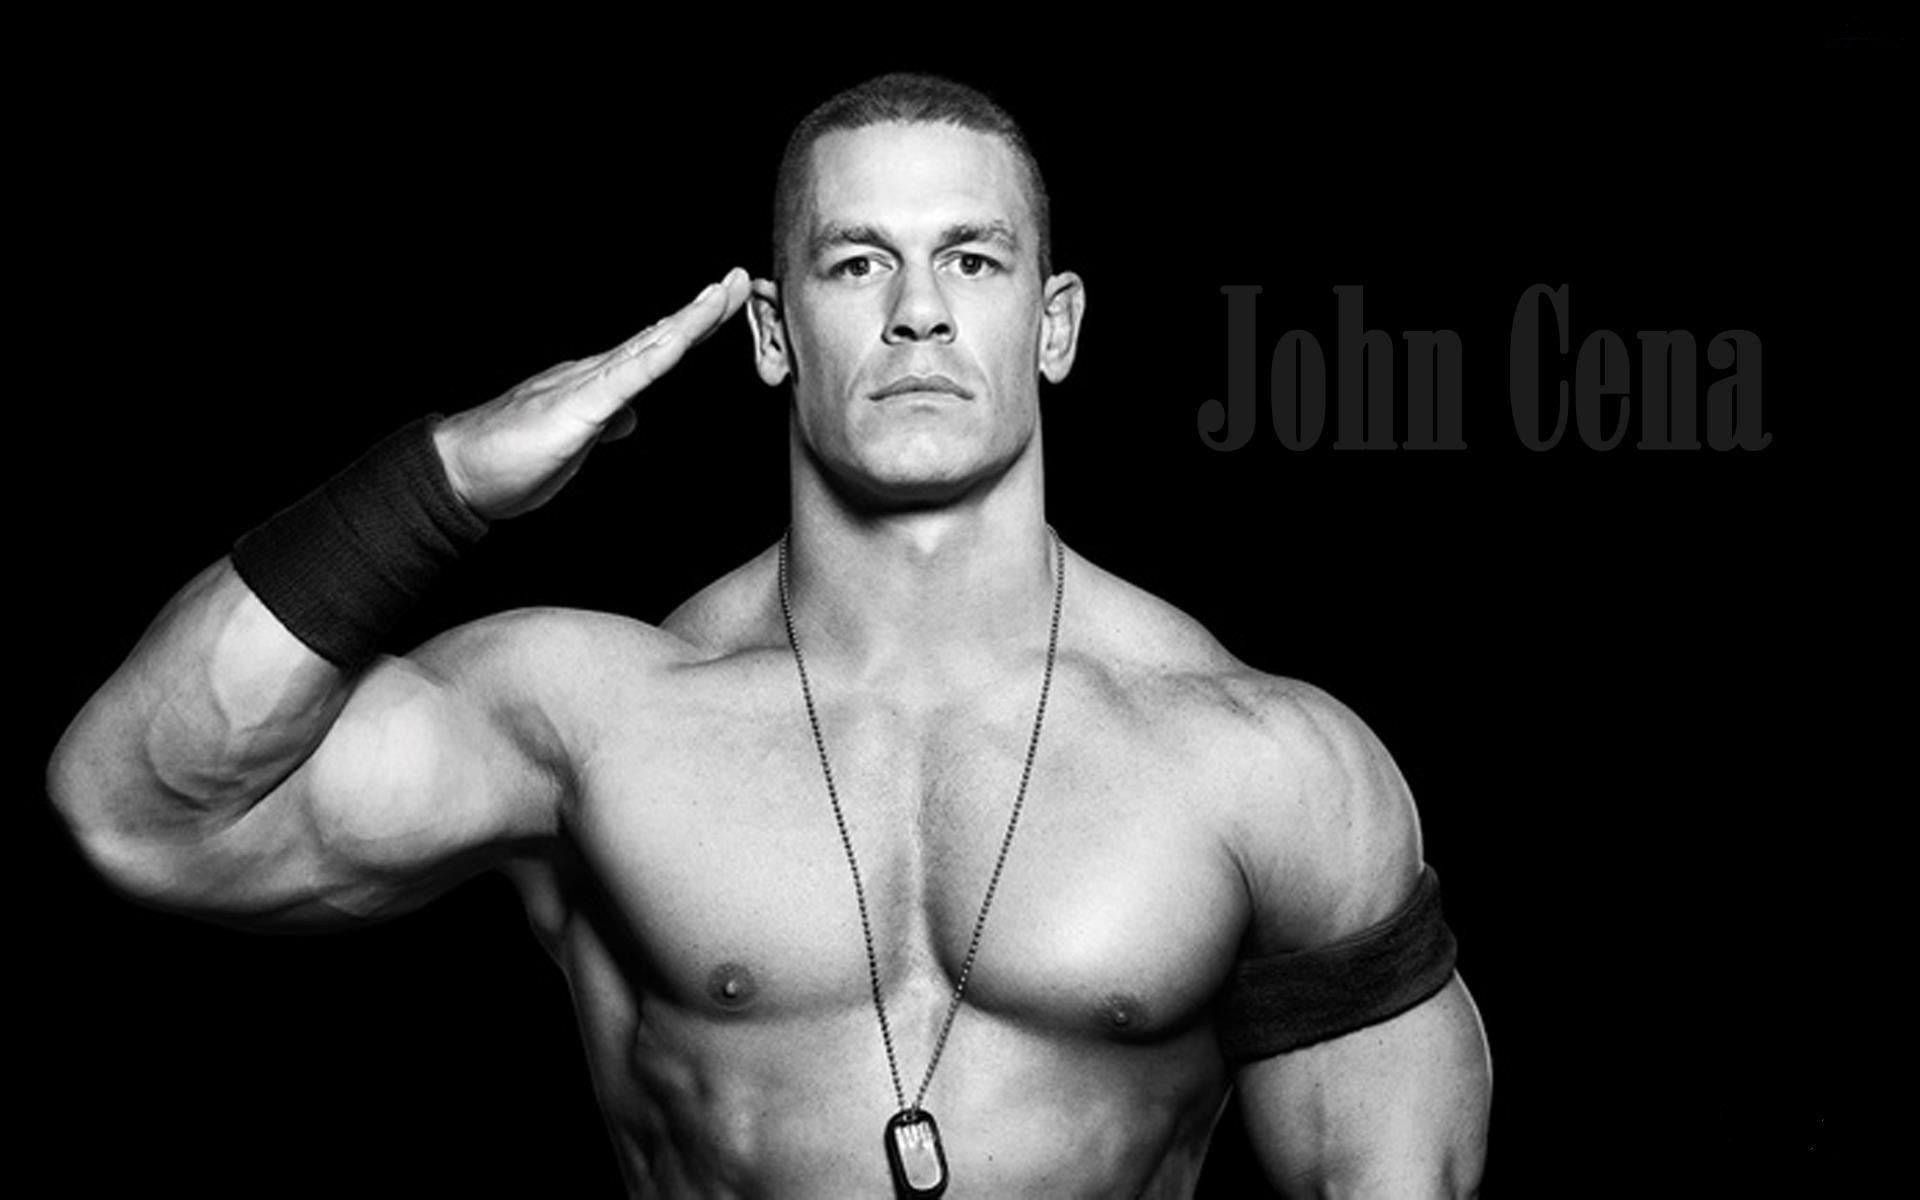 John Cena Wallpaper HD. John cena, Famous celebrities, Celebrities